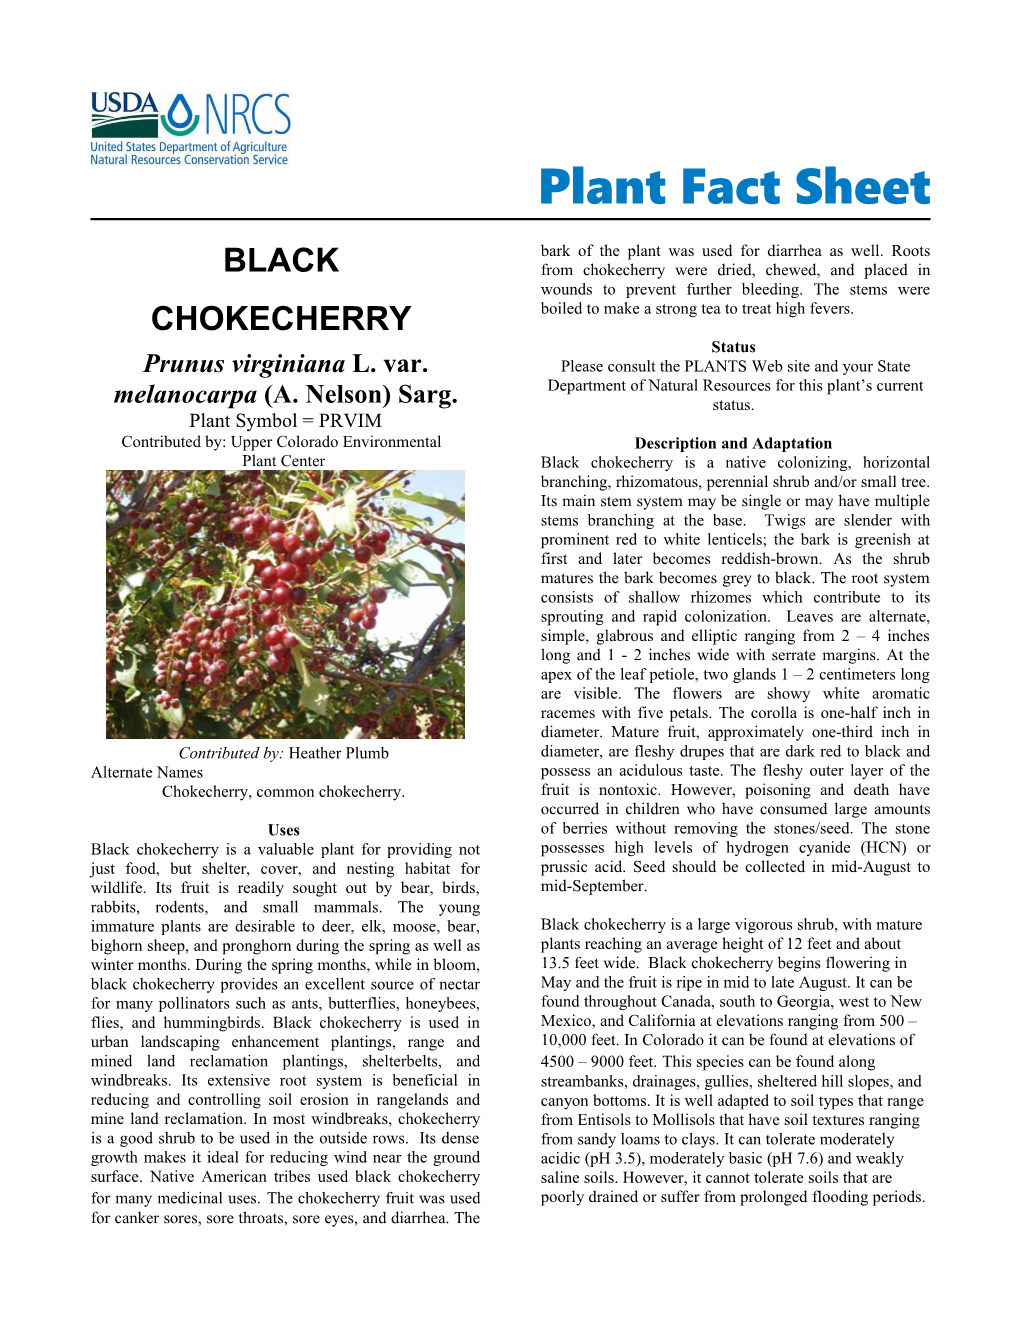 Plant Fact Sheet Black Chokecherry